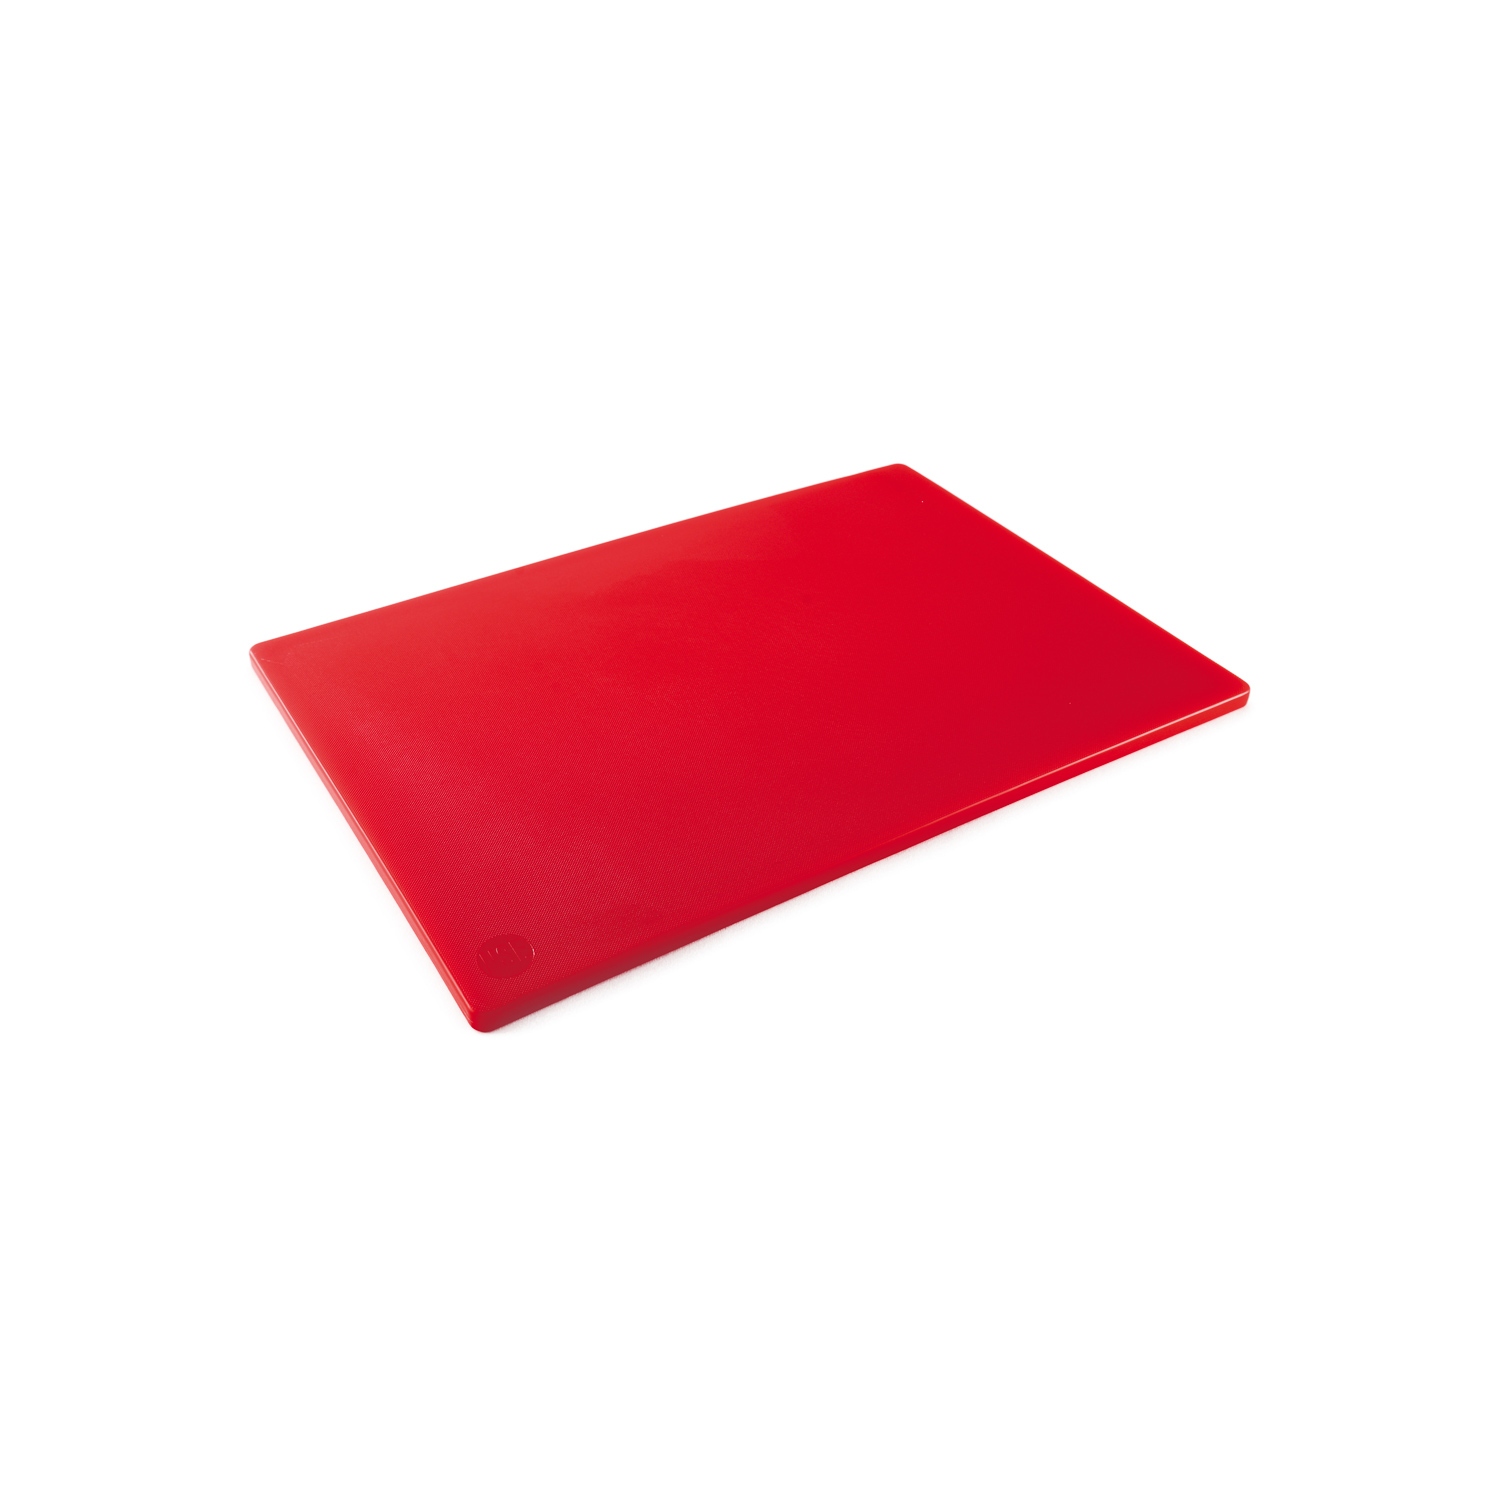 CAC China CBPH-1824R Red Plastic Cutting Board 24" x 18"